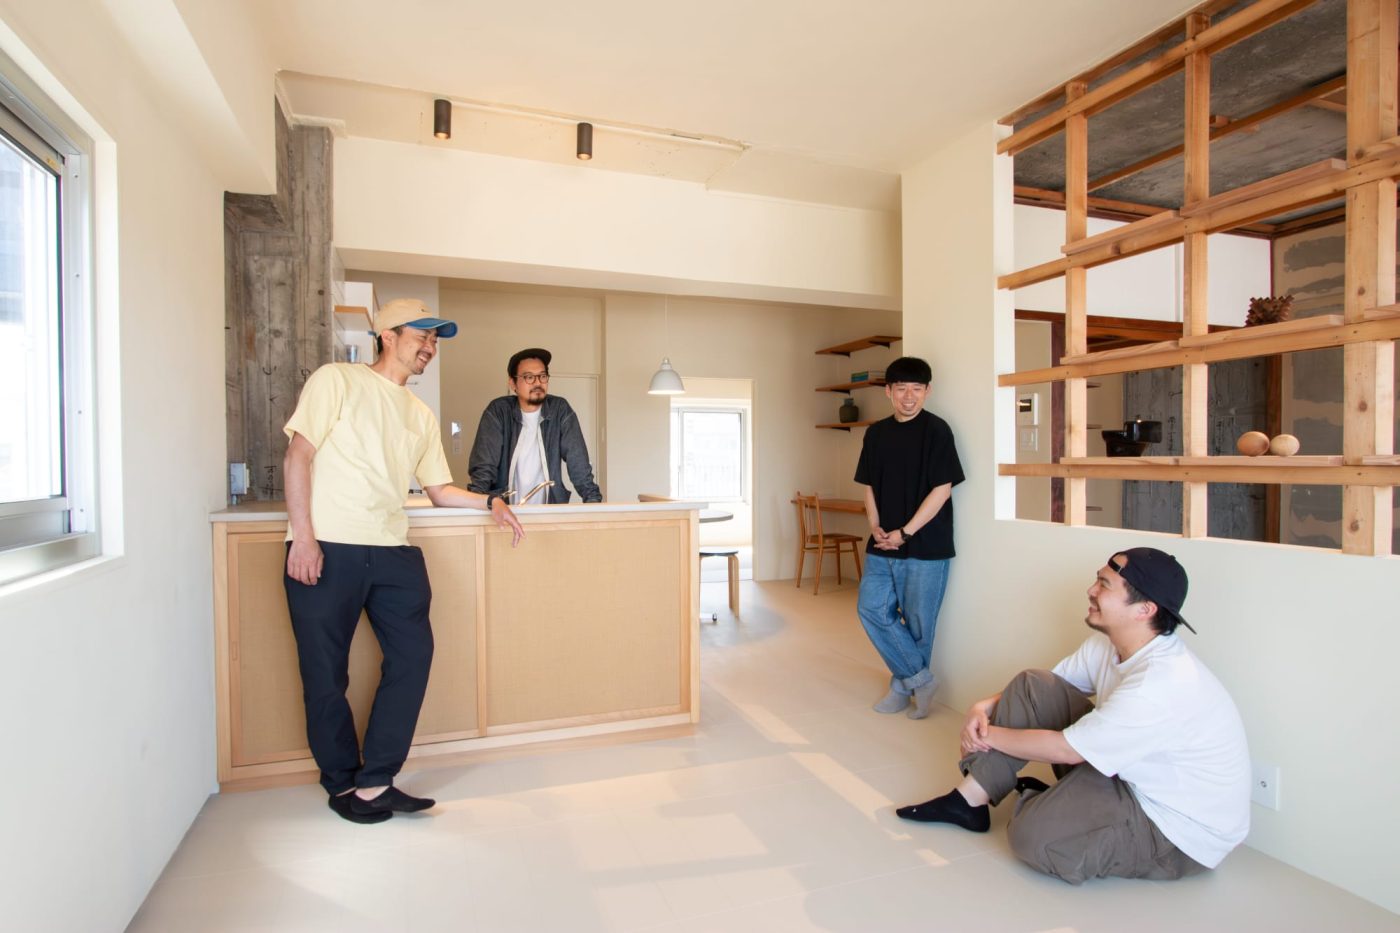 『studyroom#1』のプロジェクトメンバー。左から、工事班の一杉、渋谷、矢板、森村。